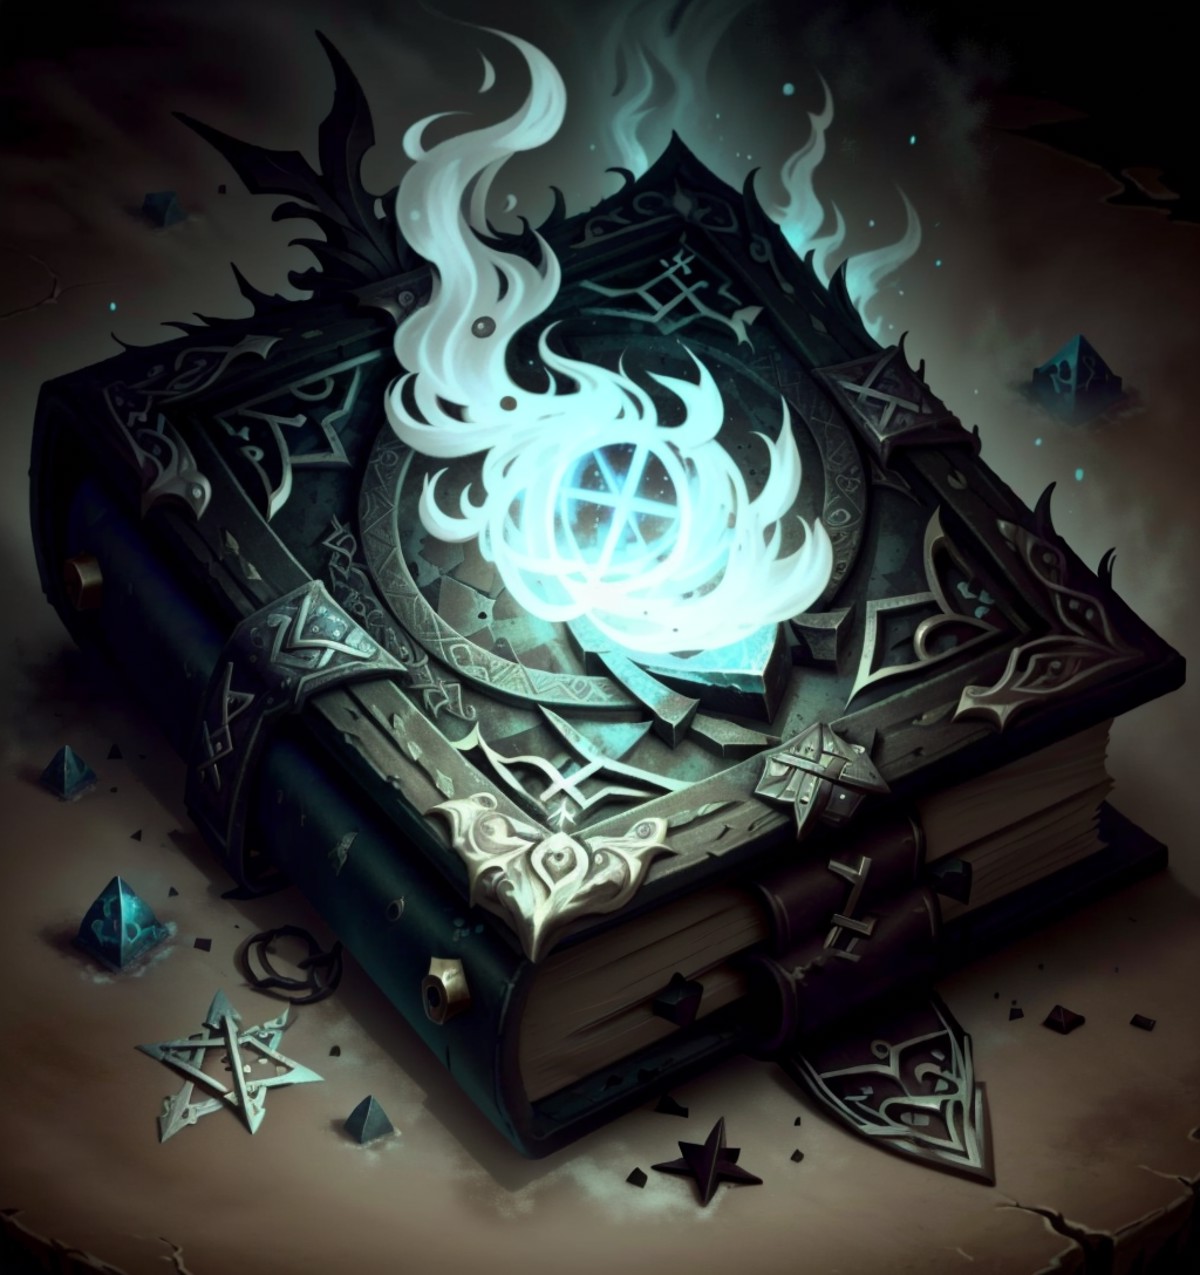 <lora:EntropyMagic-20:1>,entropymagic  ,   fantasy,   dissolving, decay, black flames   ,ashes,
grimoire,
A book of spells...